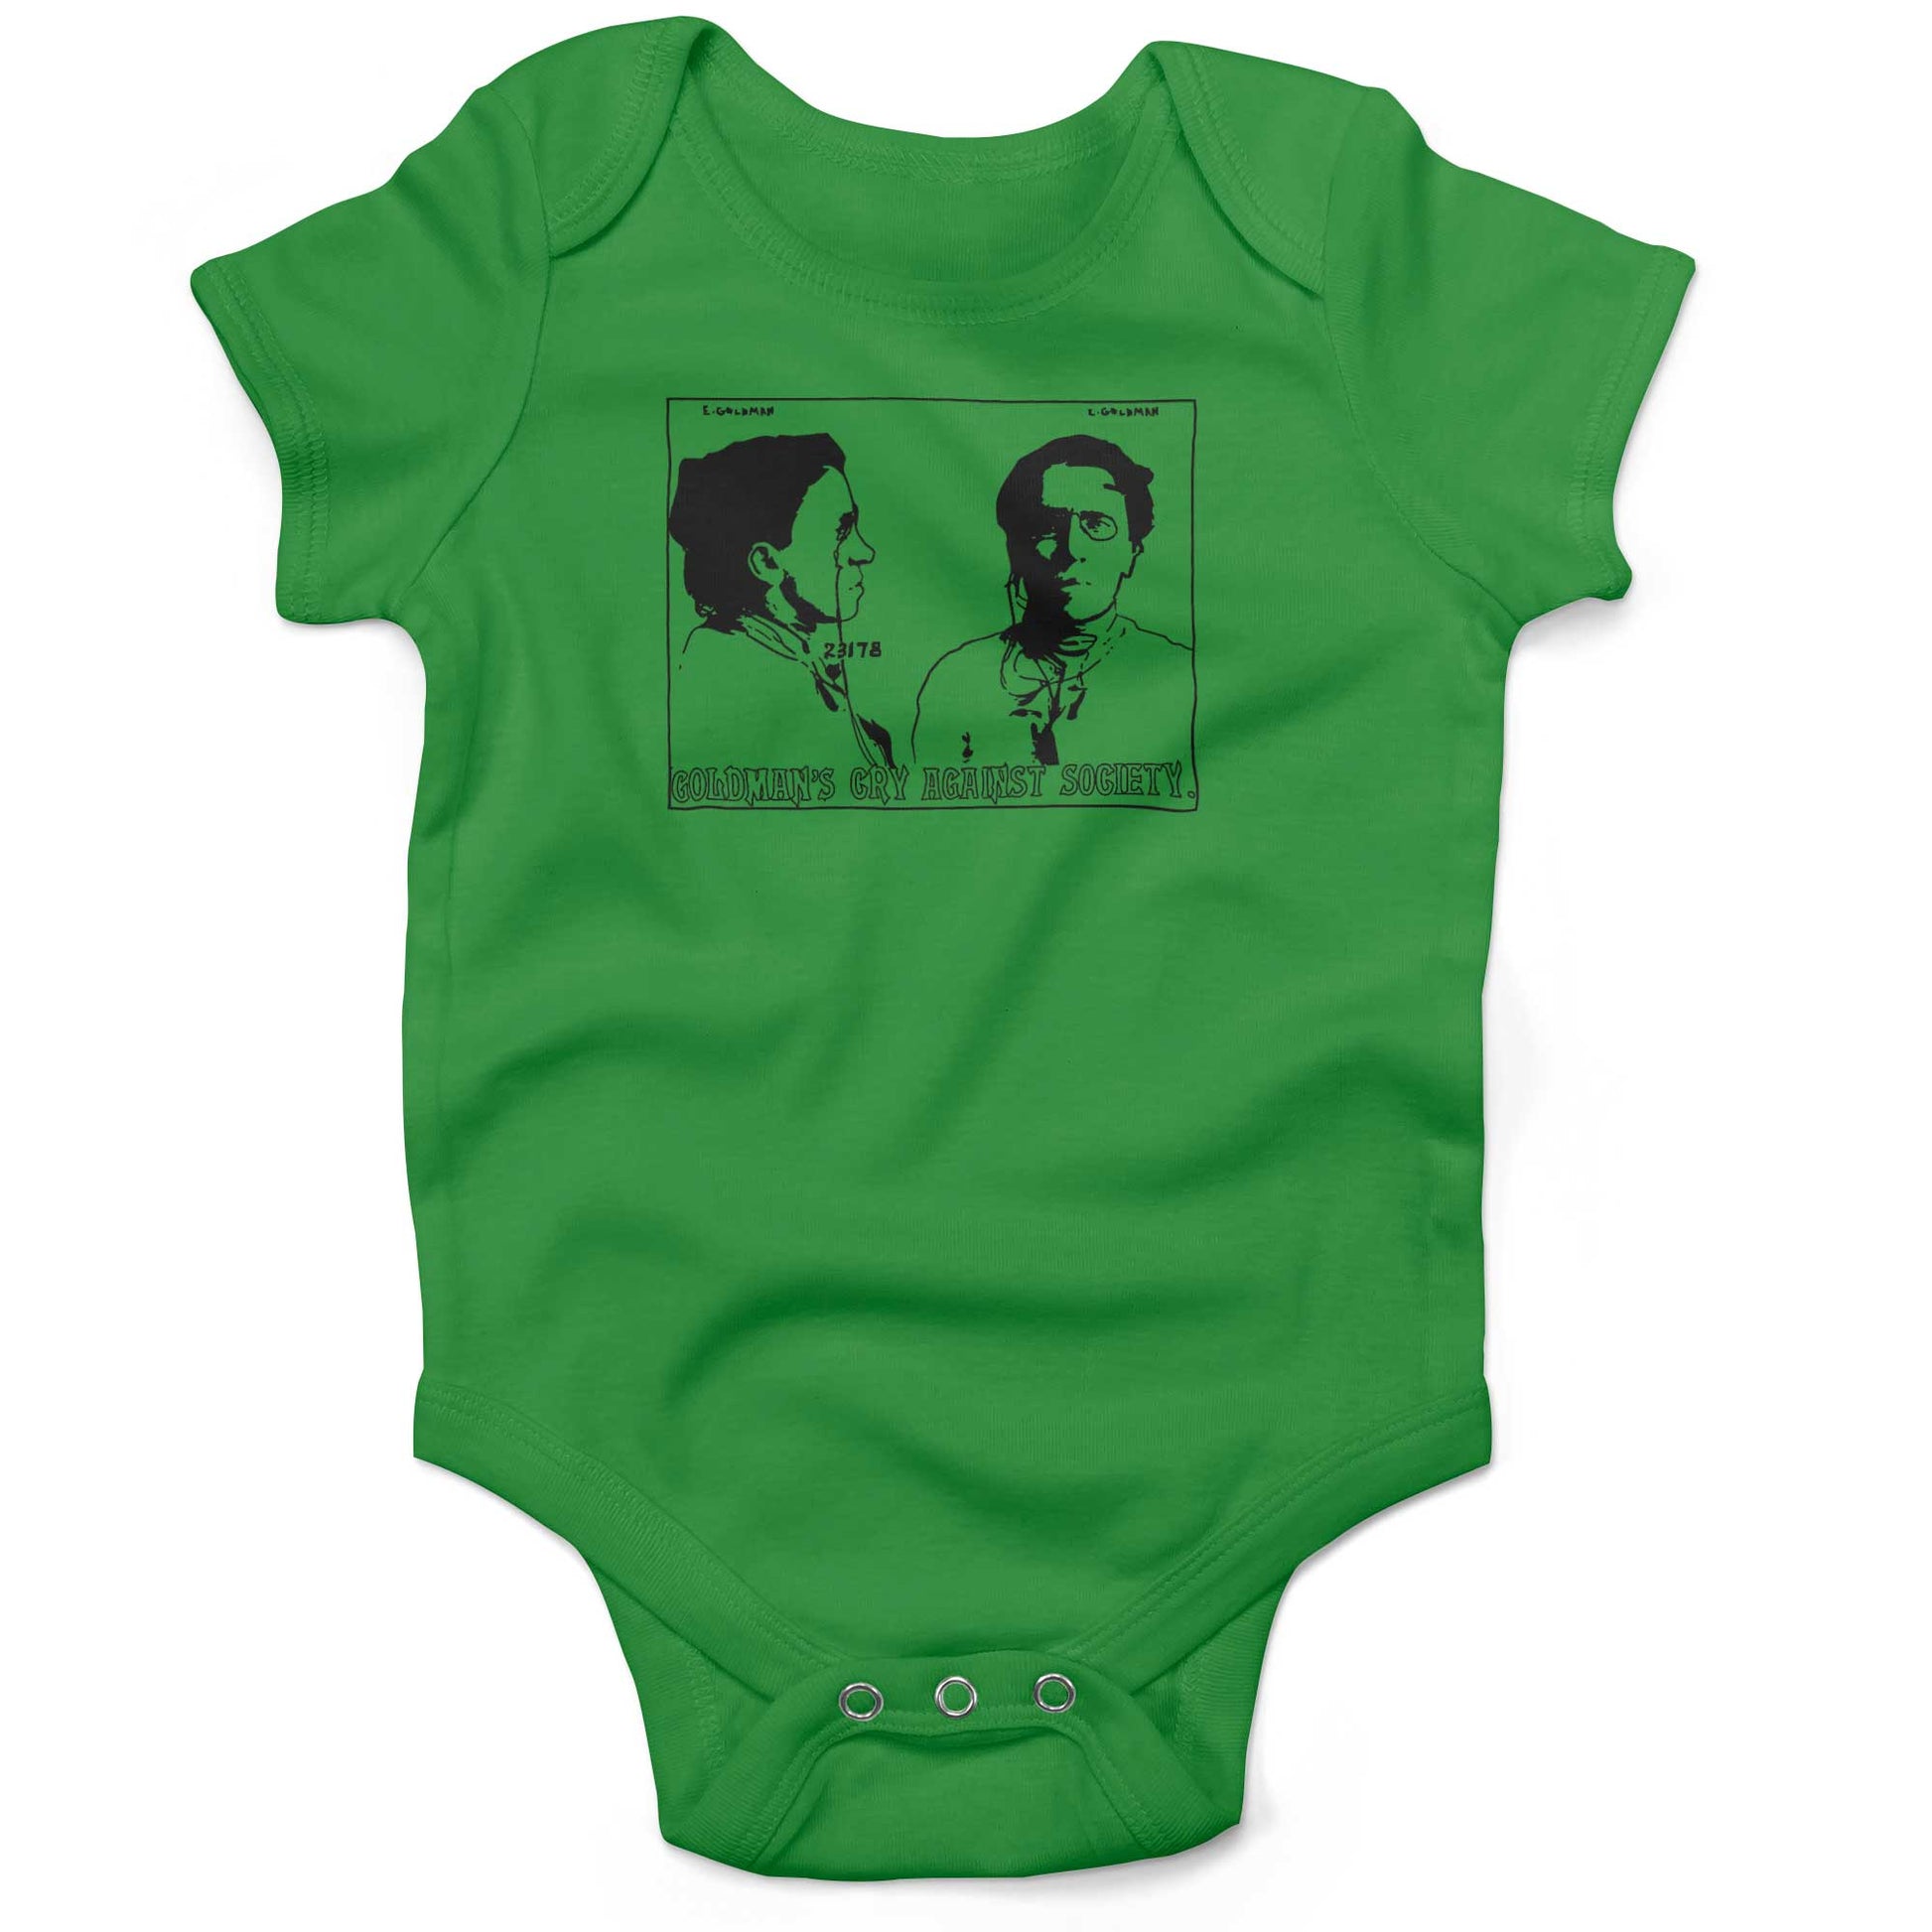 Emma Goldman Infant Bodysuit or Raglan Baby Tee-Grass Green-3-6 months